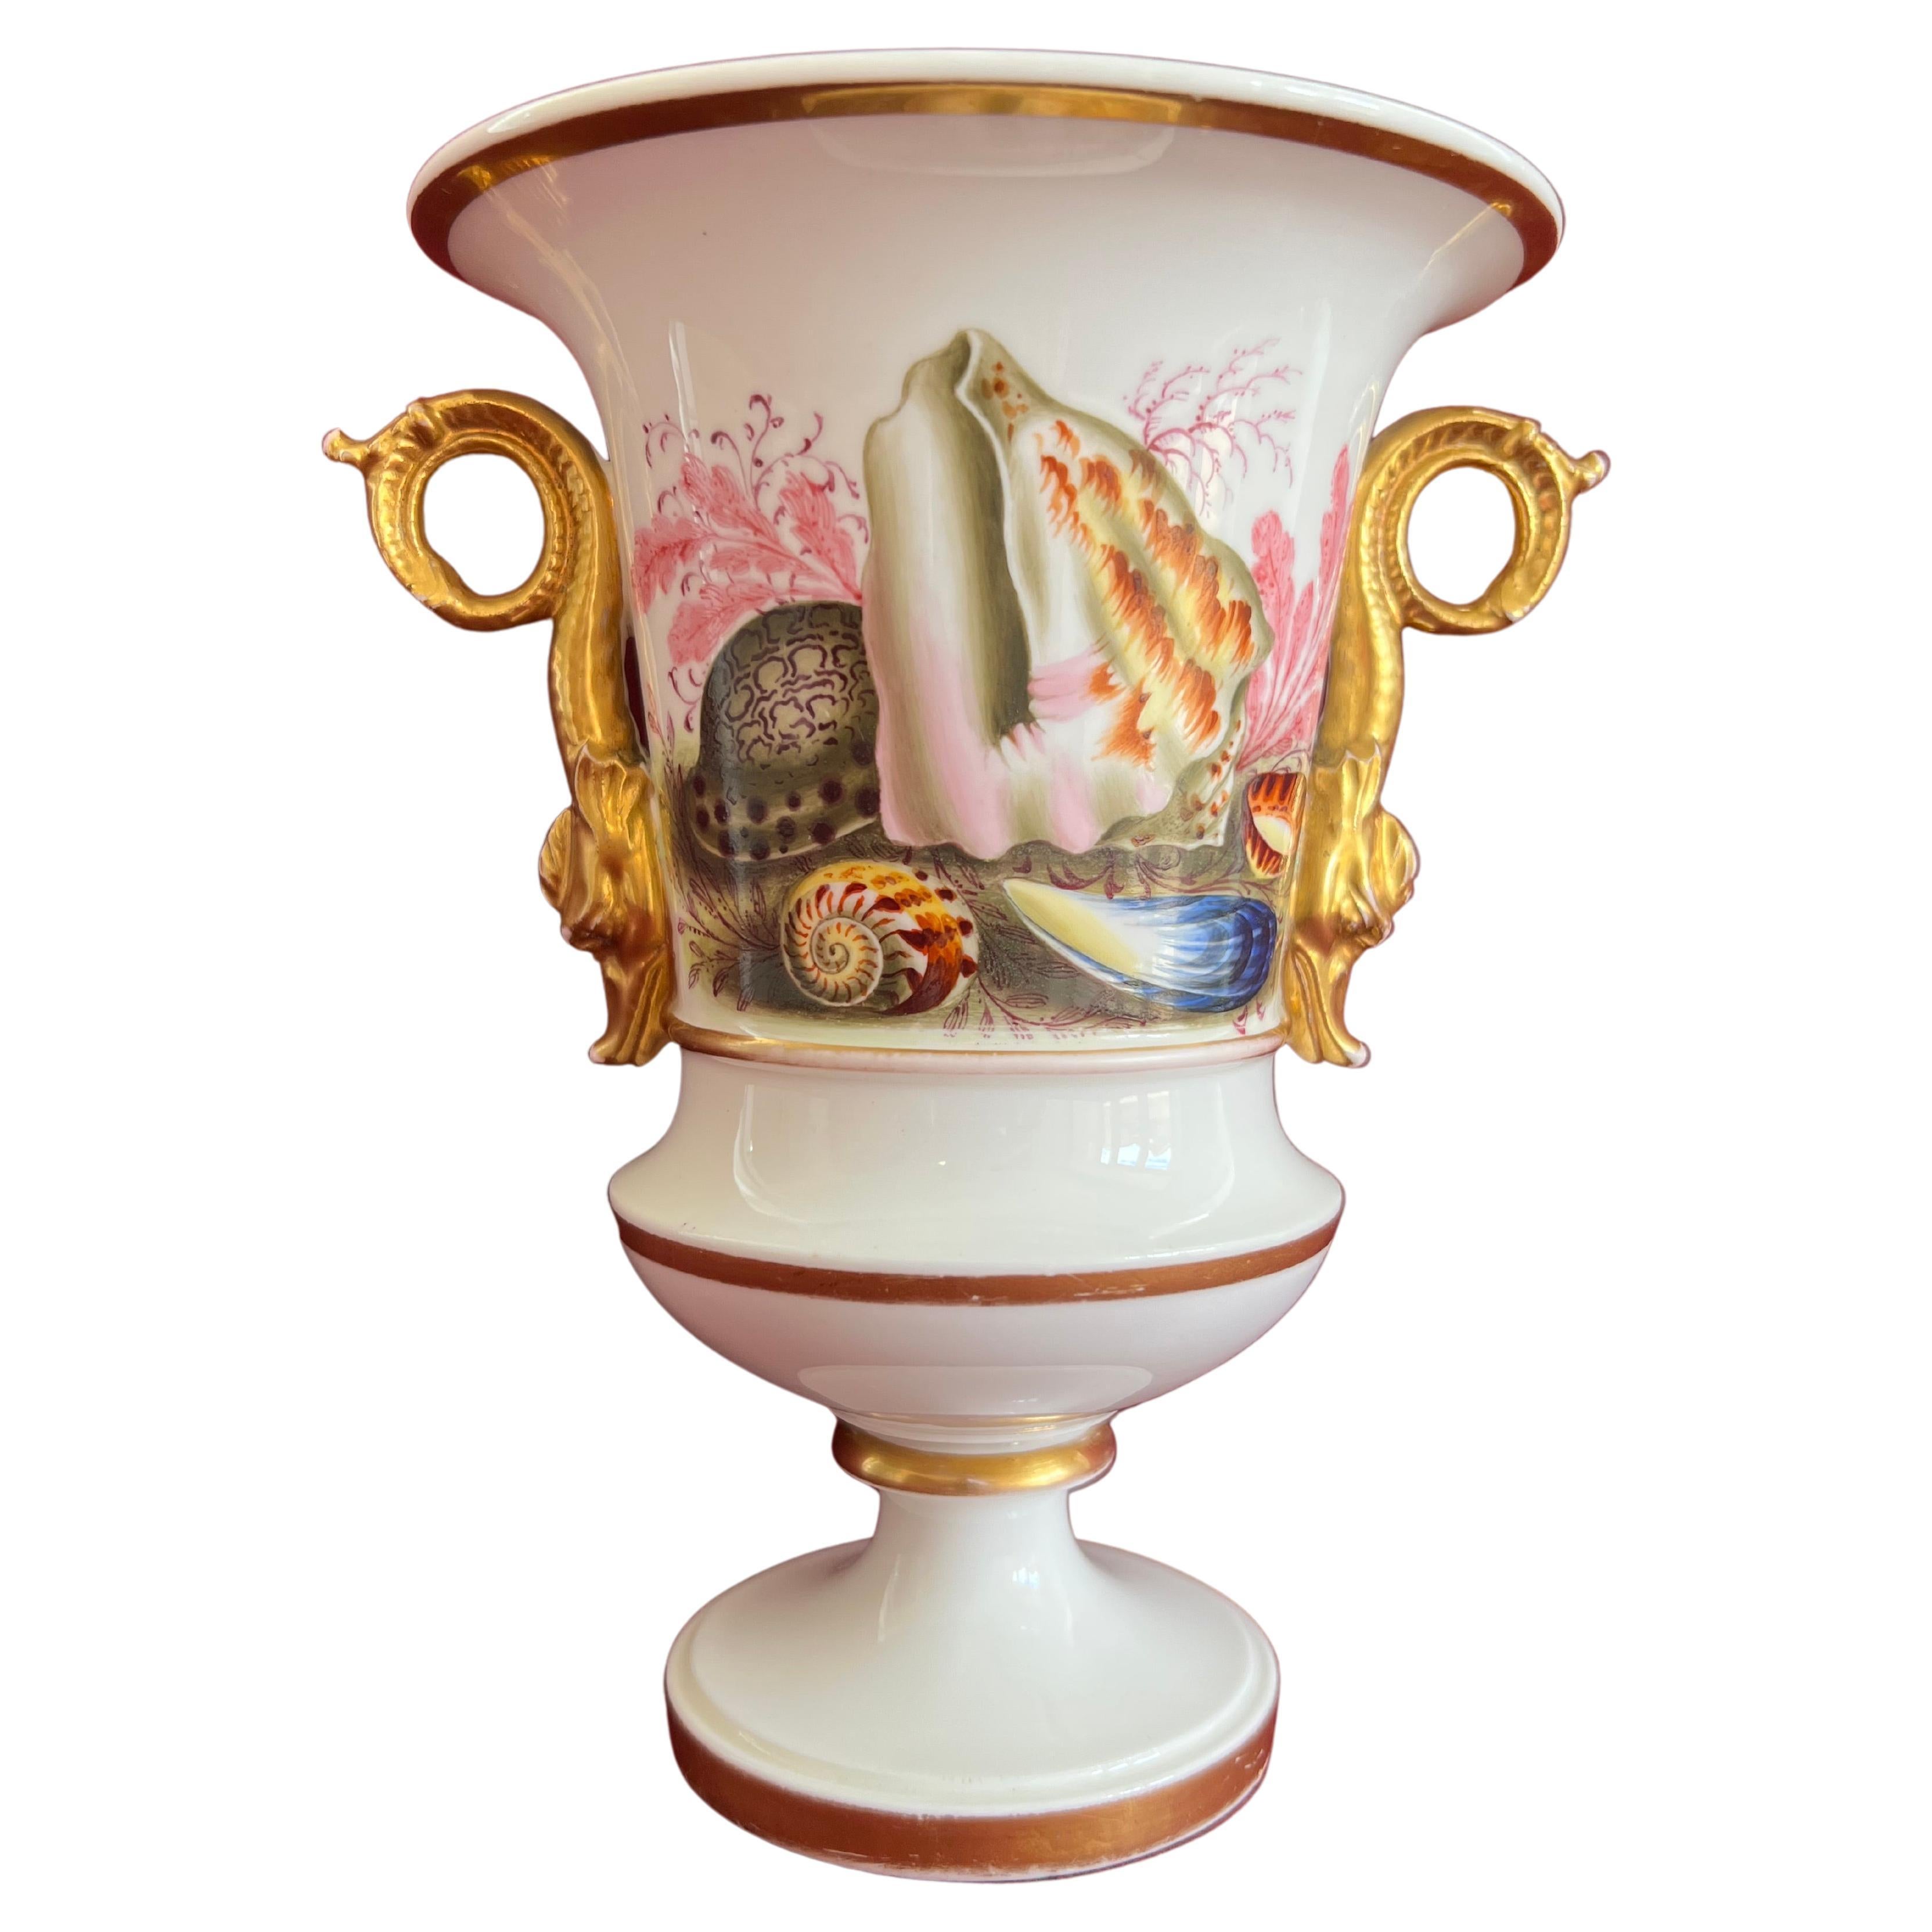 Rare Spode Porcelain Shell Decorated Vase Pattern 3930 C.1824 For Sale